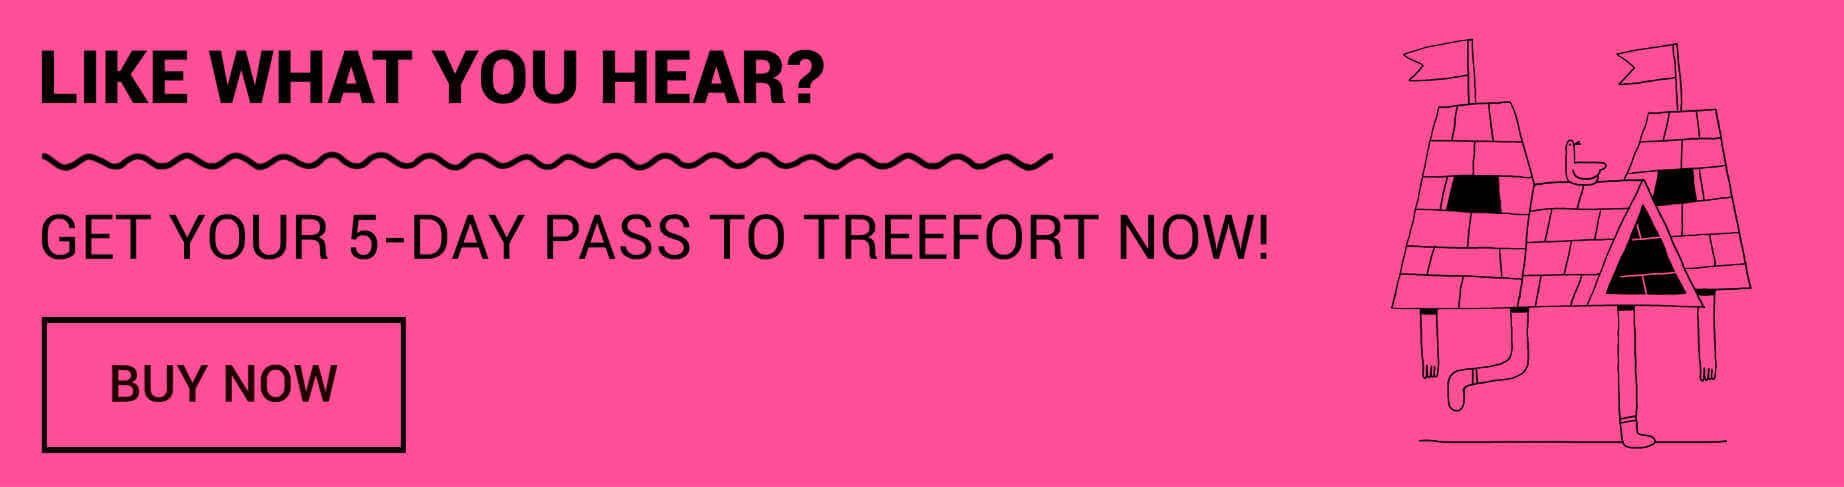 Treefort 2018 is the sh*t